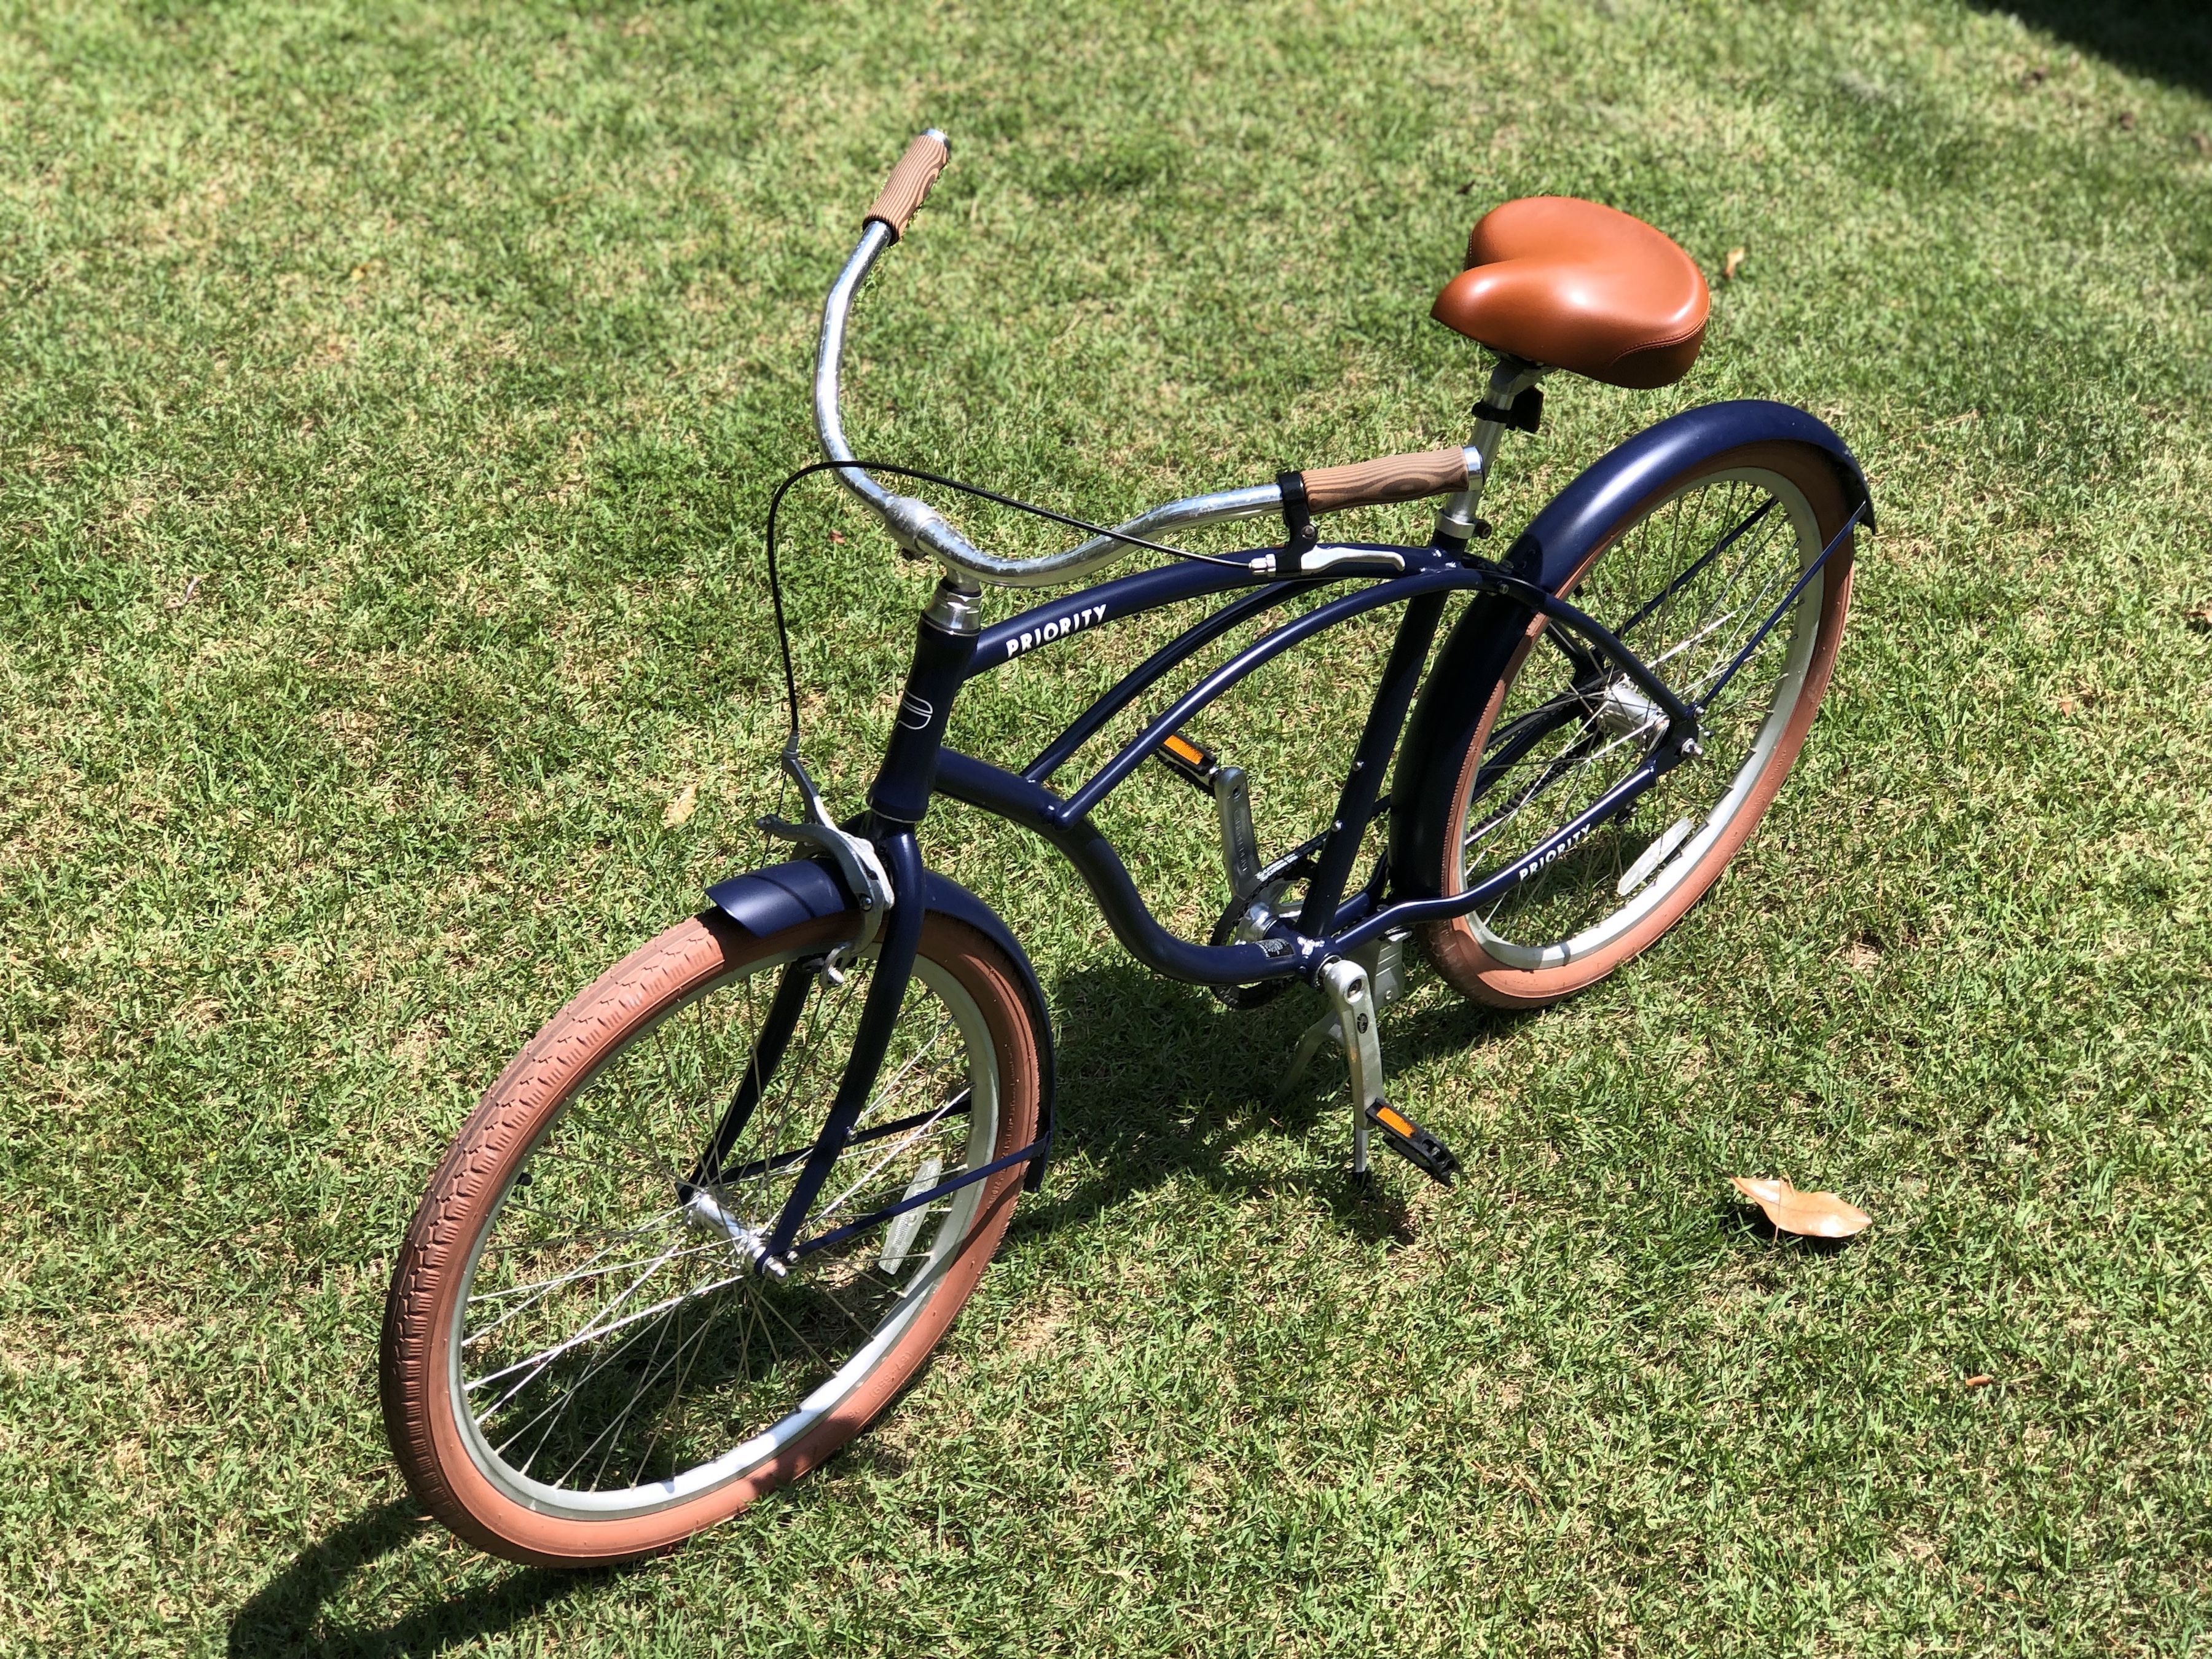 Tower Tulum Rust-Free Belt Drive Beach Cruiser Bicycle